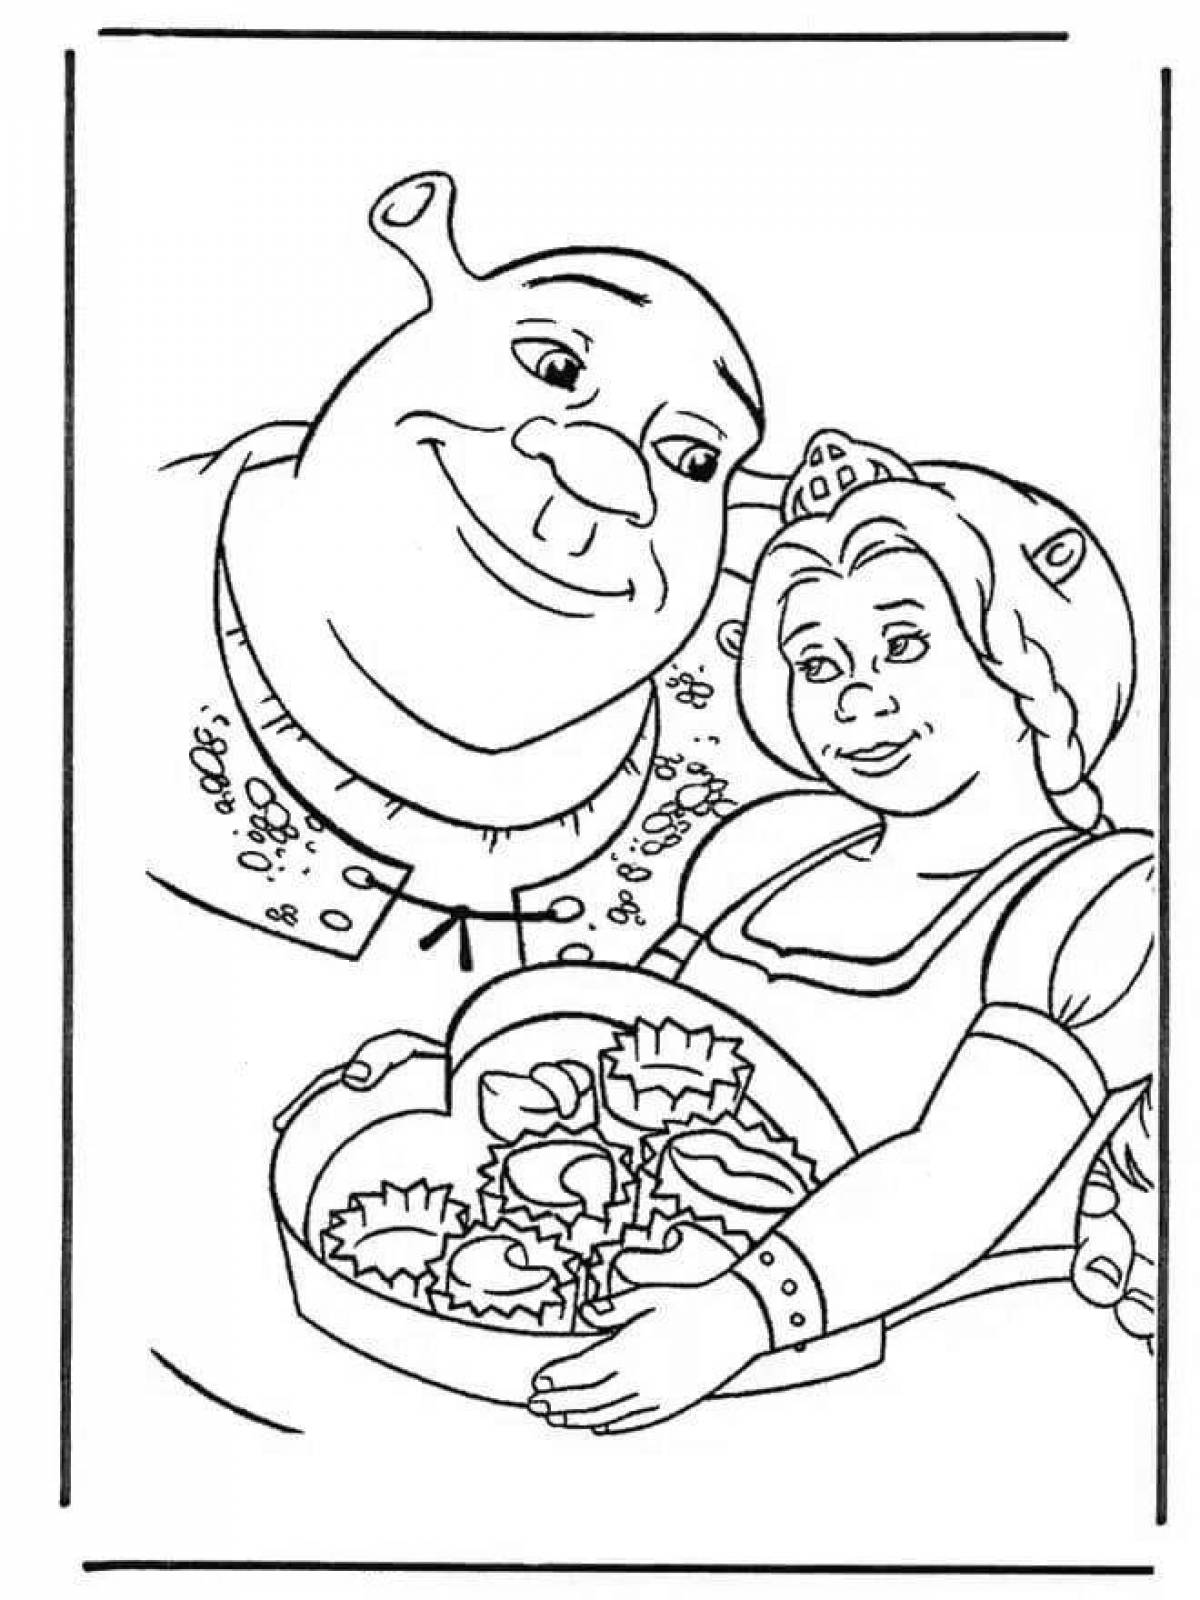 Shrek and fiona mystical coloring book